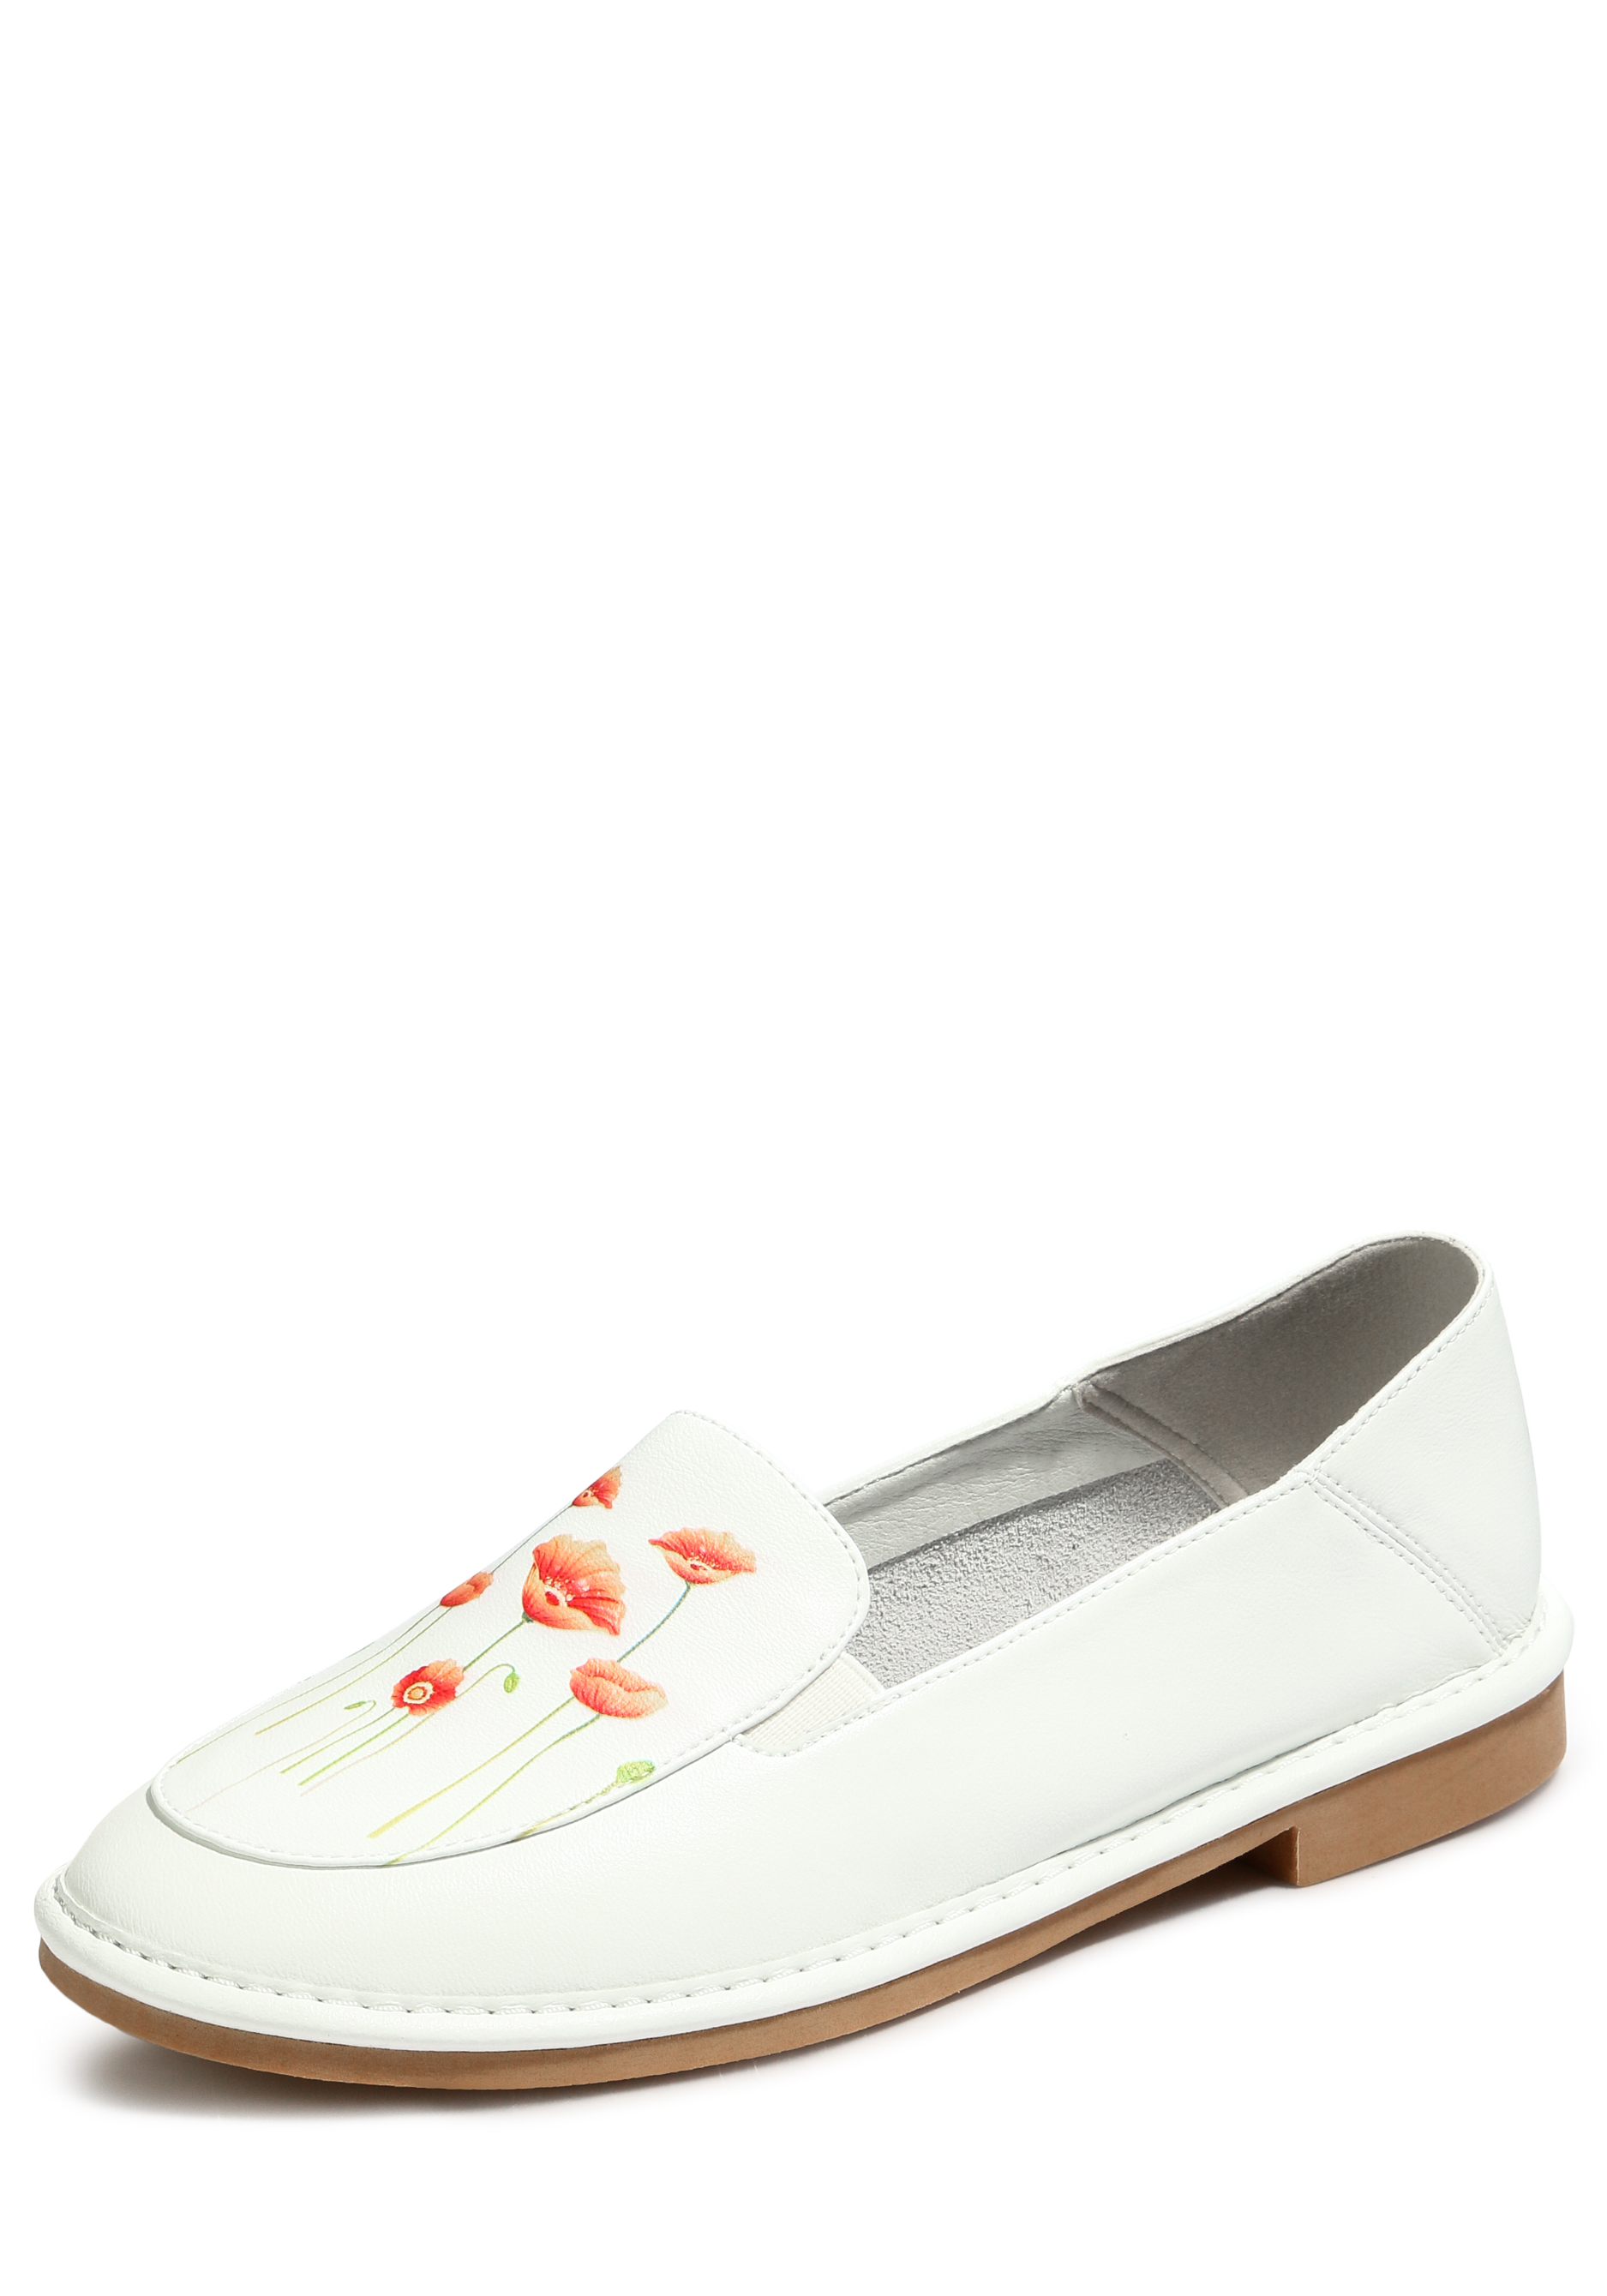 Туфли женские "Лили" KUMFO, цвет бежевый, размер 39 - фото 1